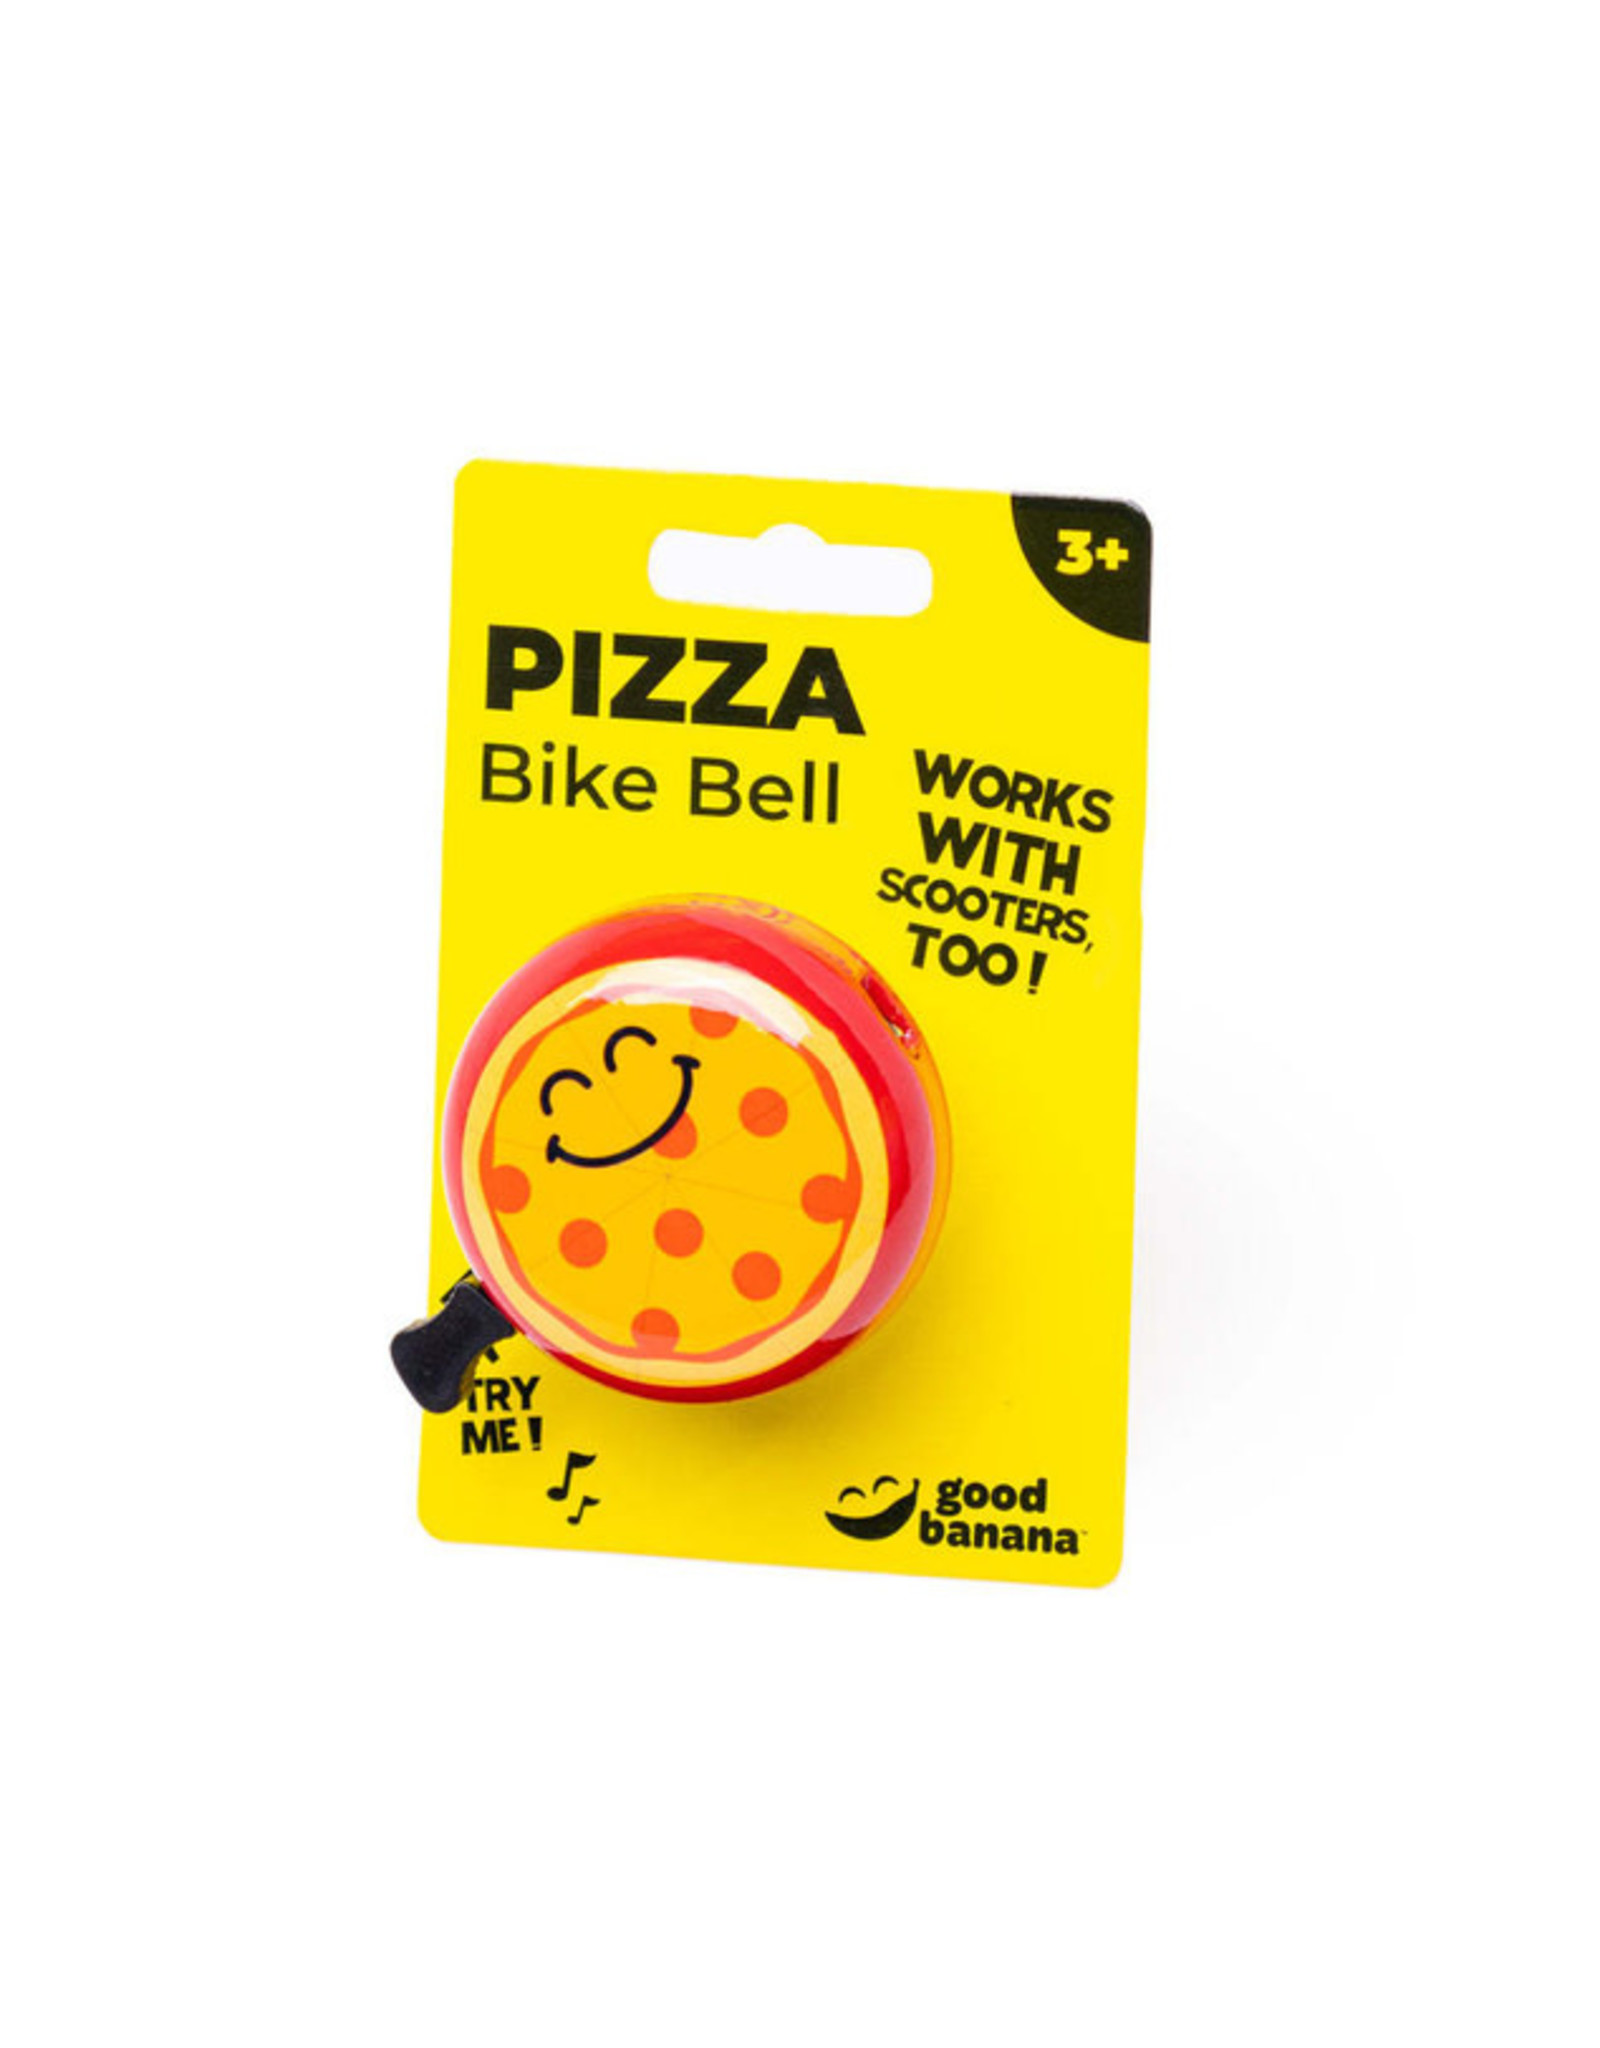 Good Banana Bike Bell - Pizza